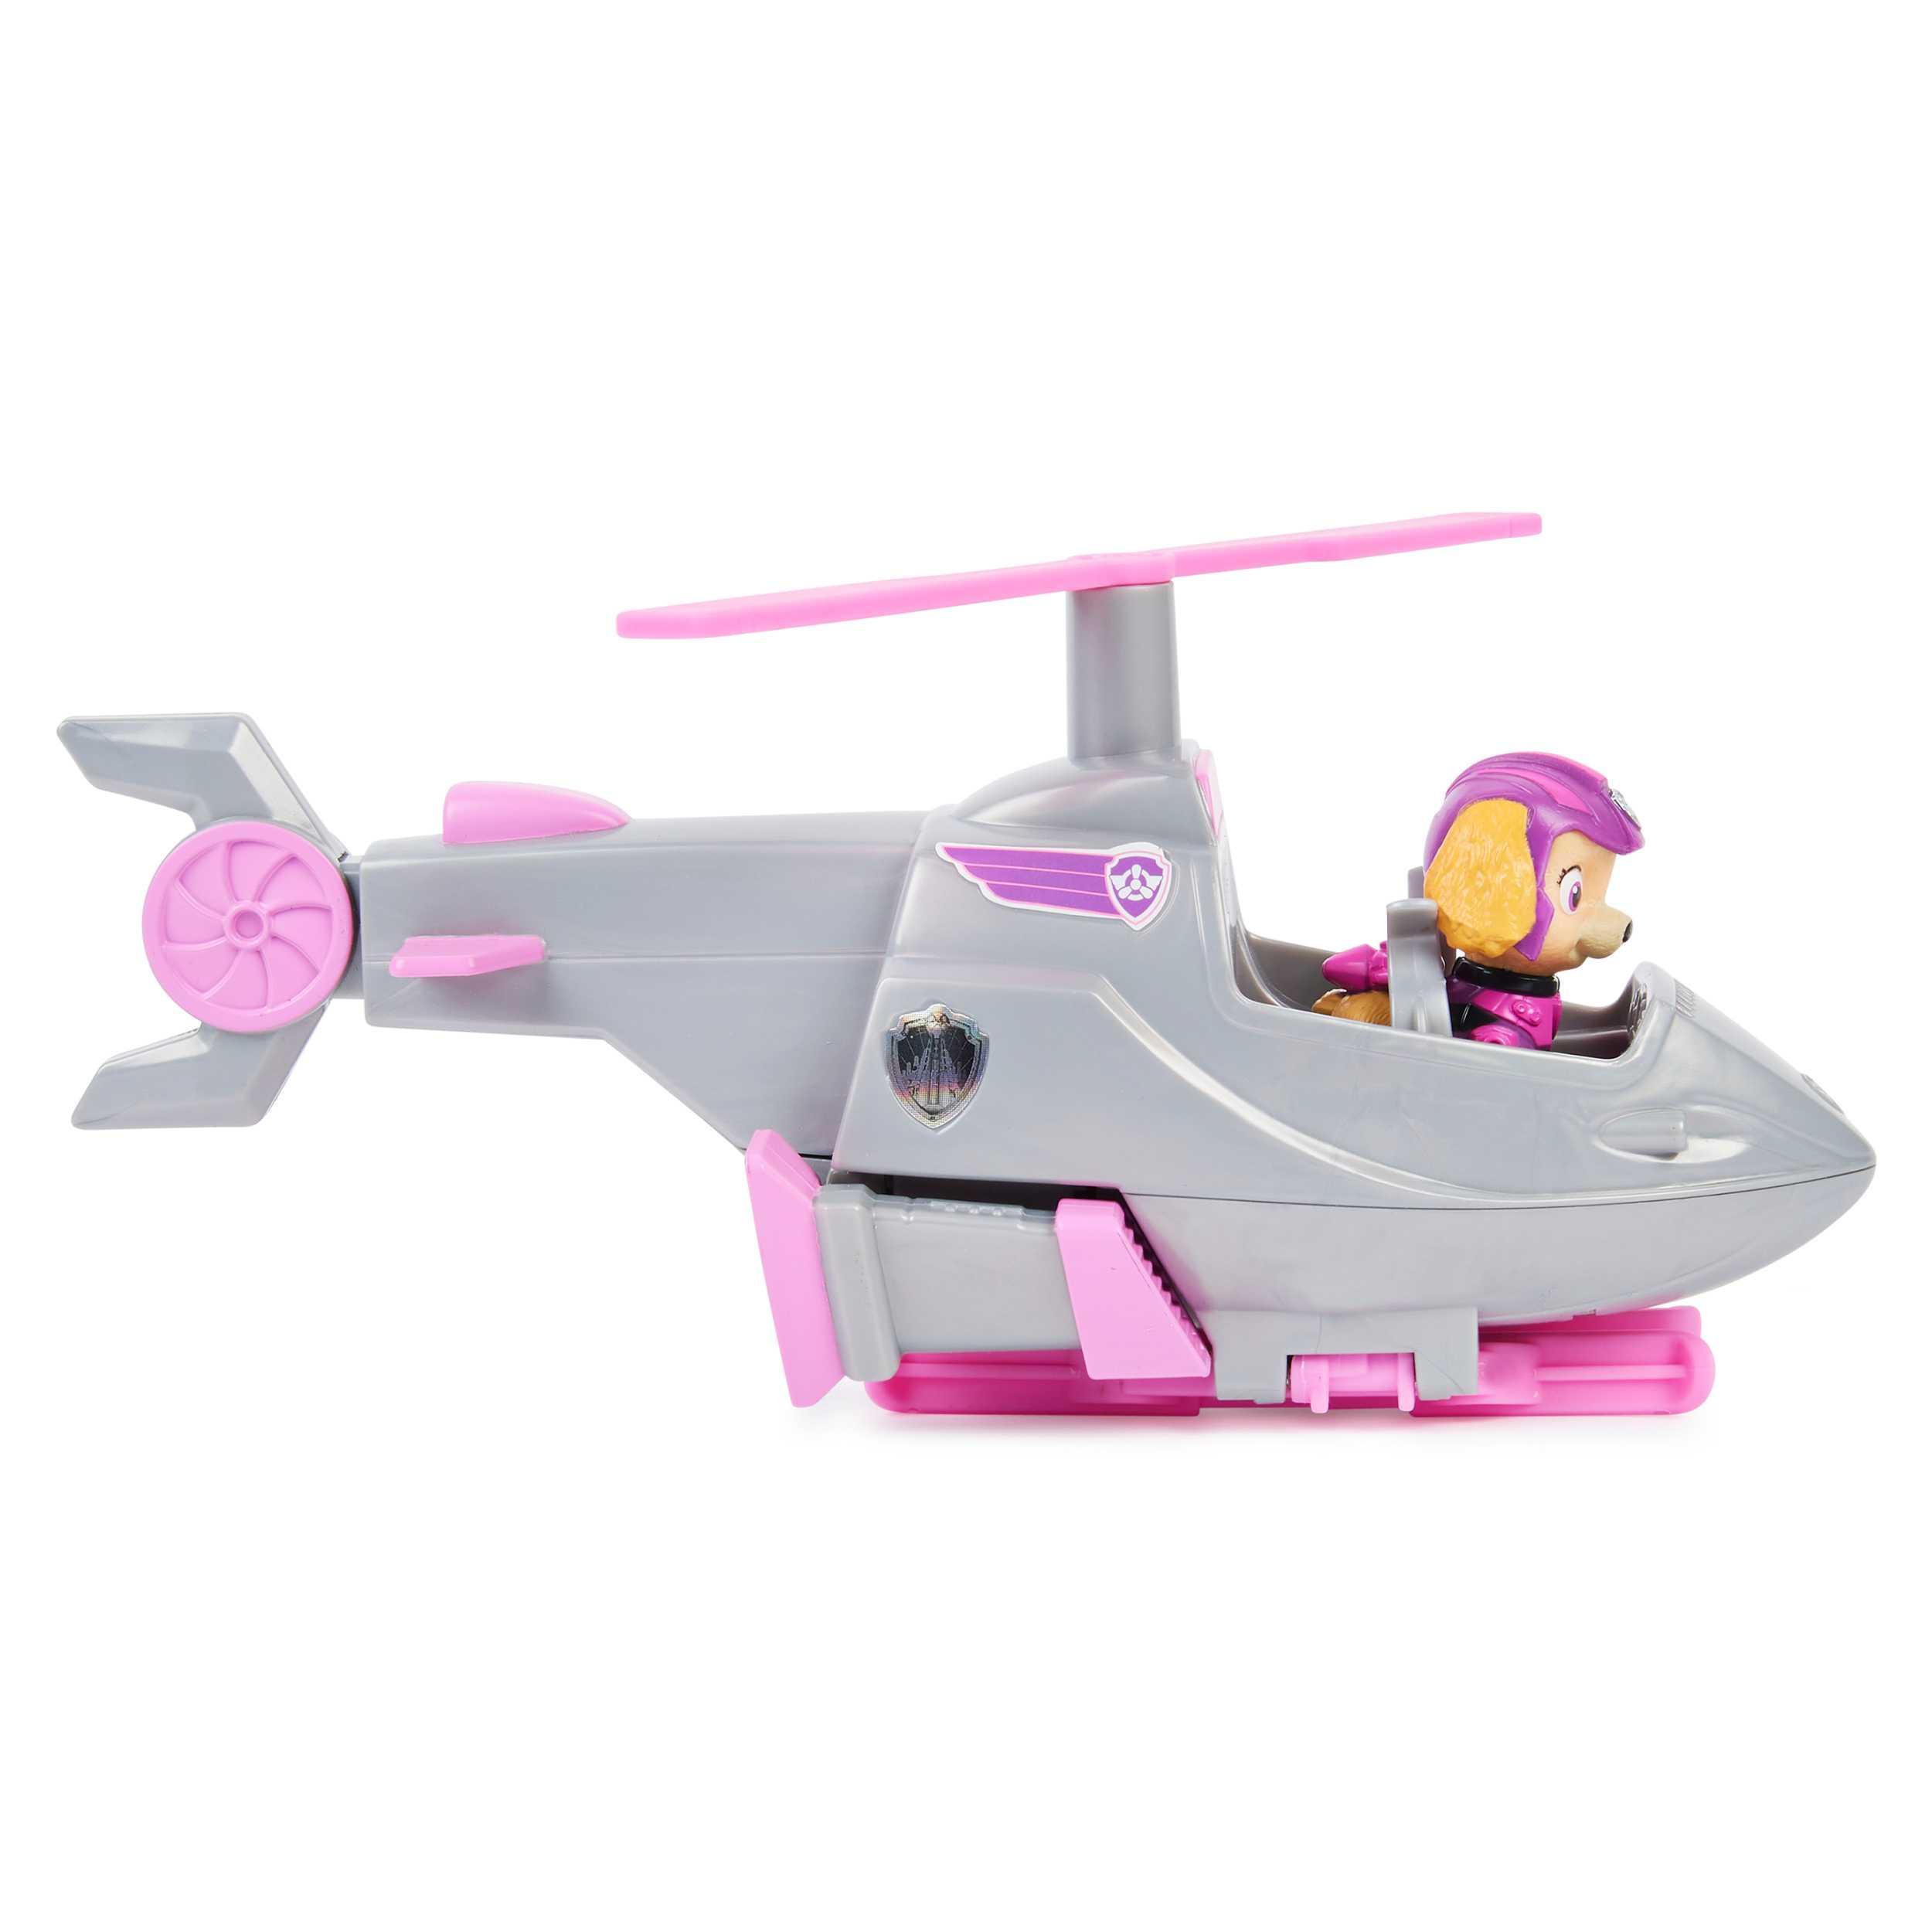 Paw Patrol Skye Radio Control Helicopter Toy:  Skye Helicopter Toy: Must-Have for Paw Patrol Fans